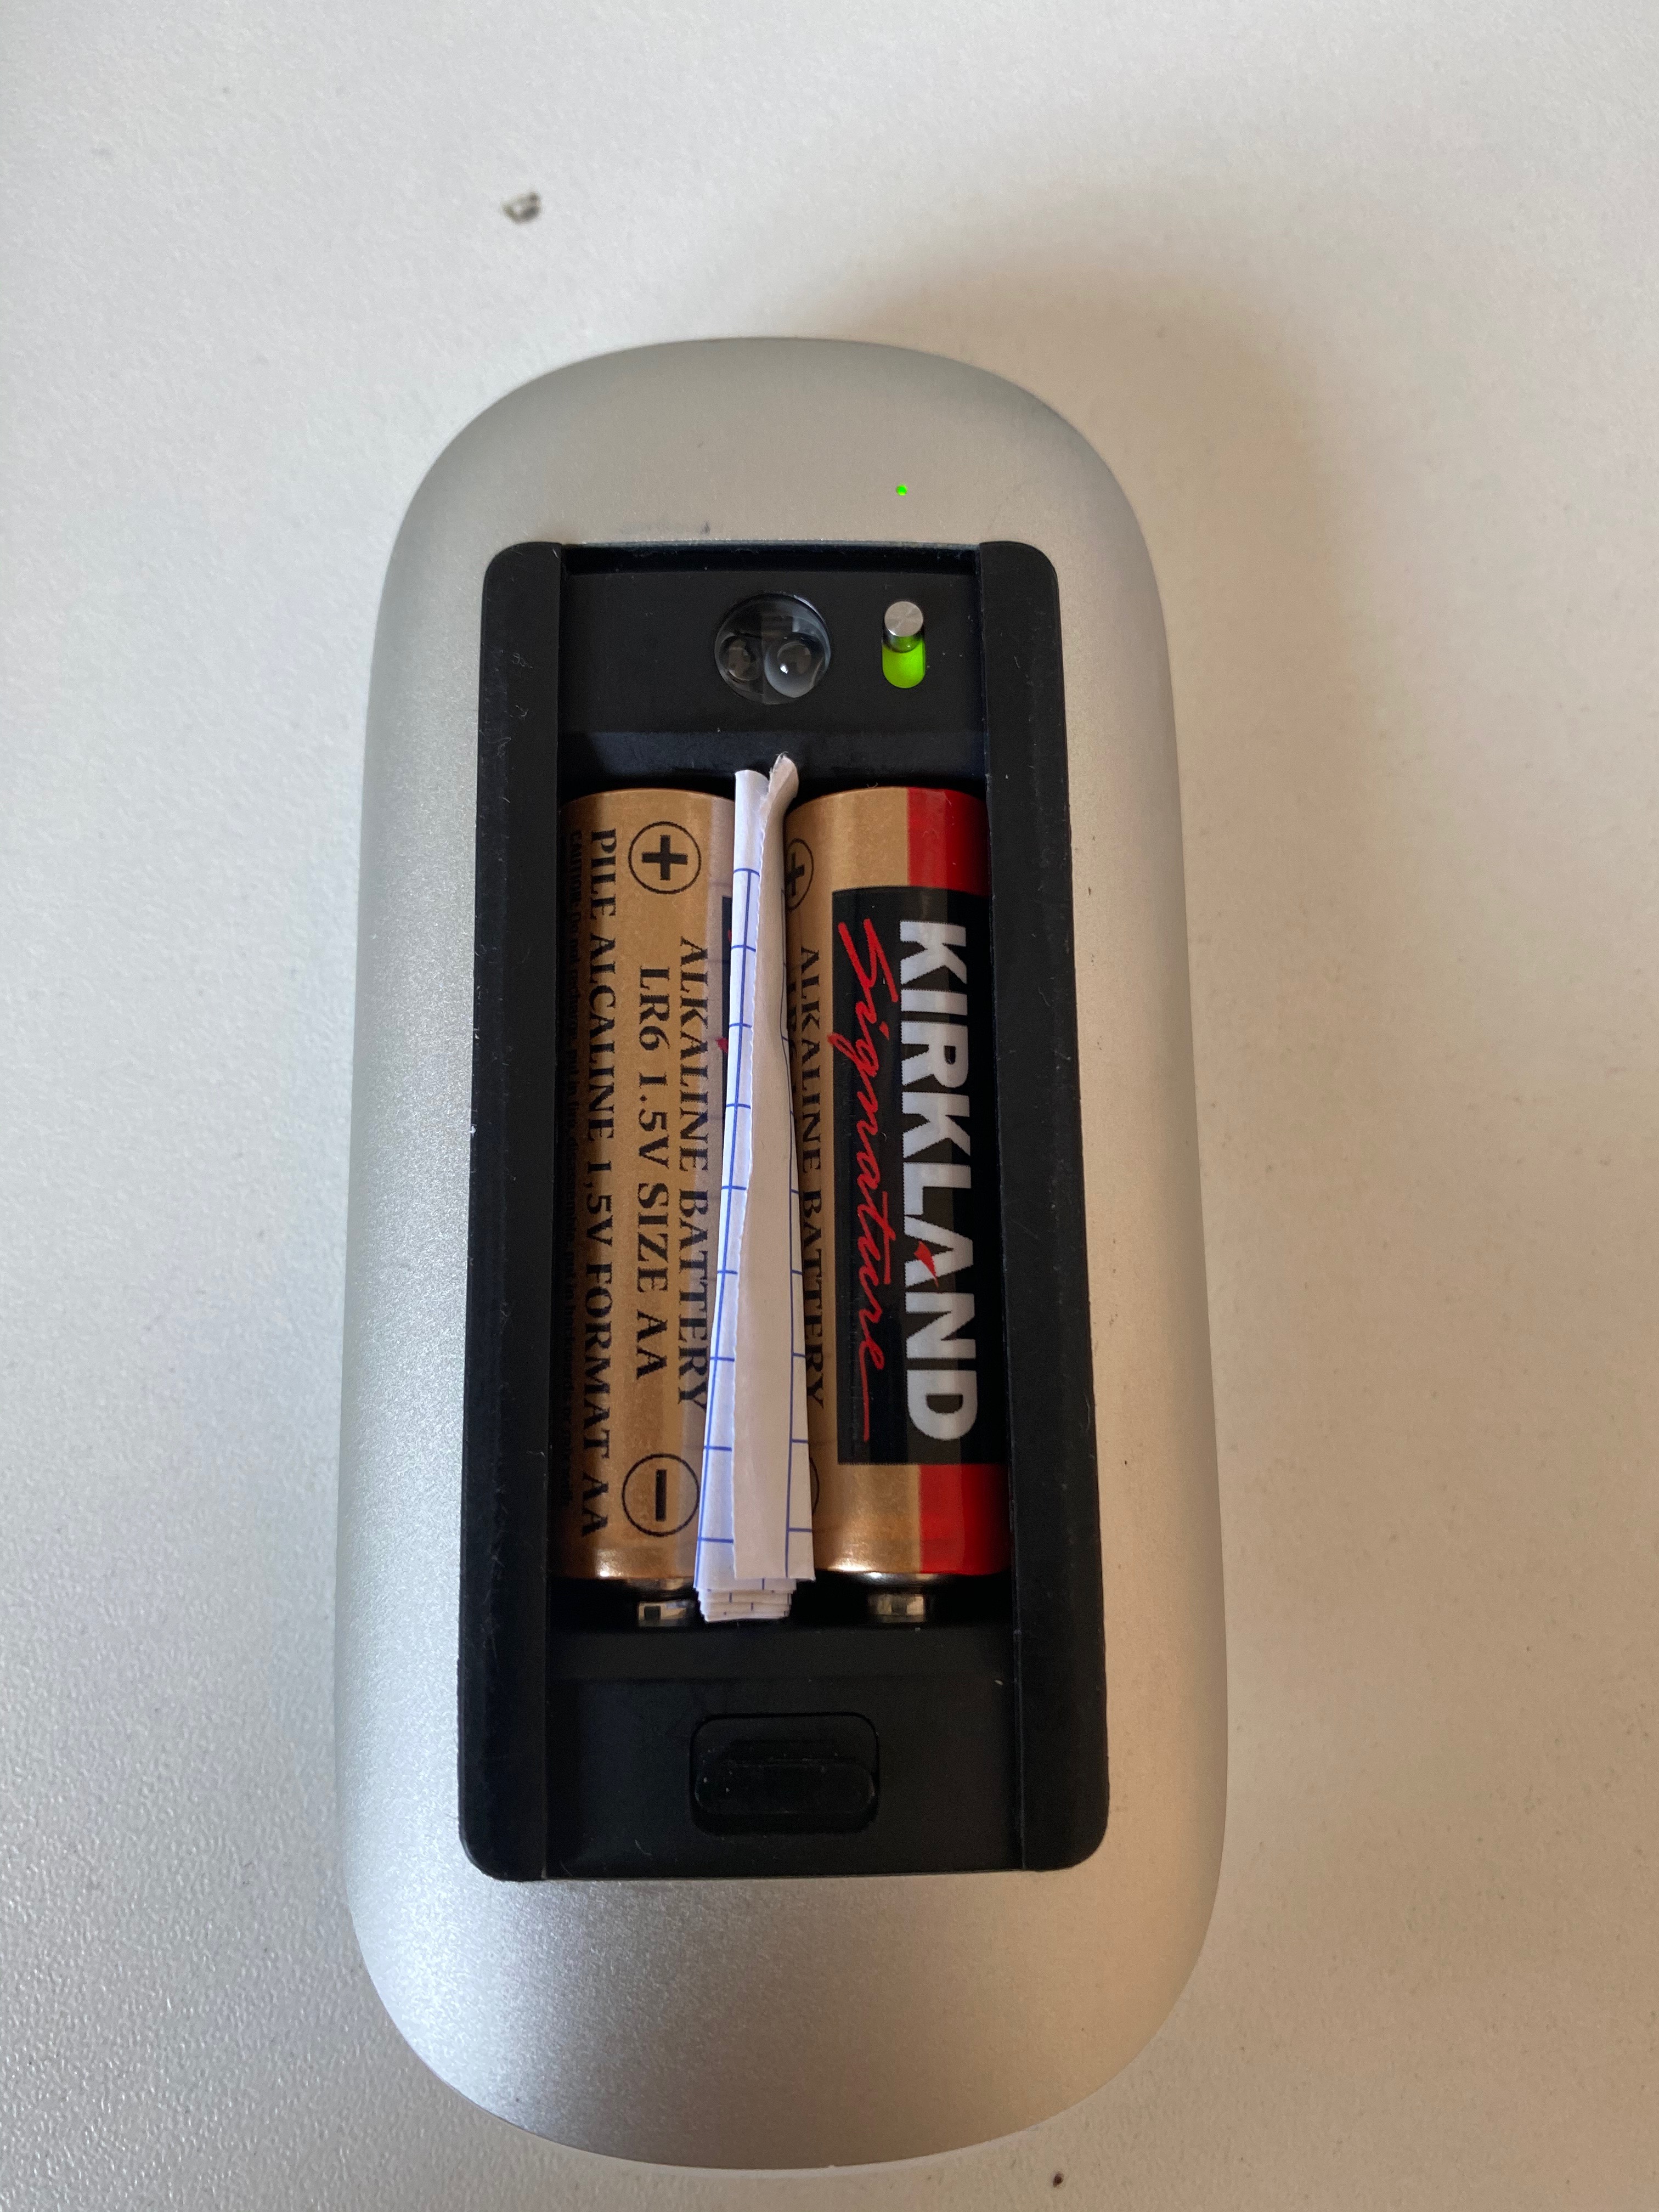 apple magic mouse battery